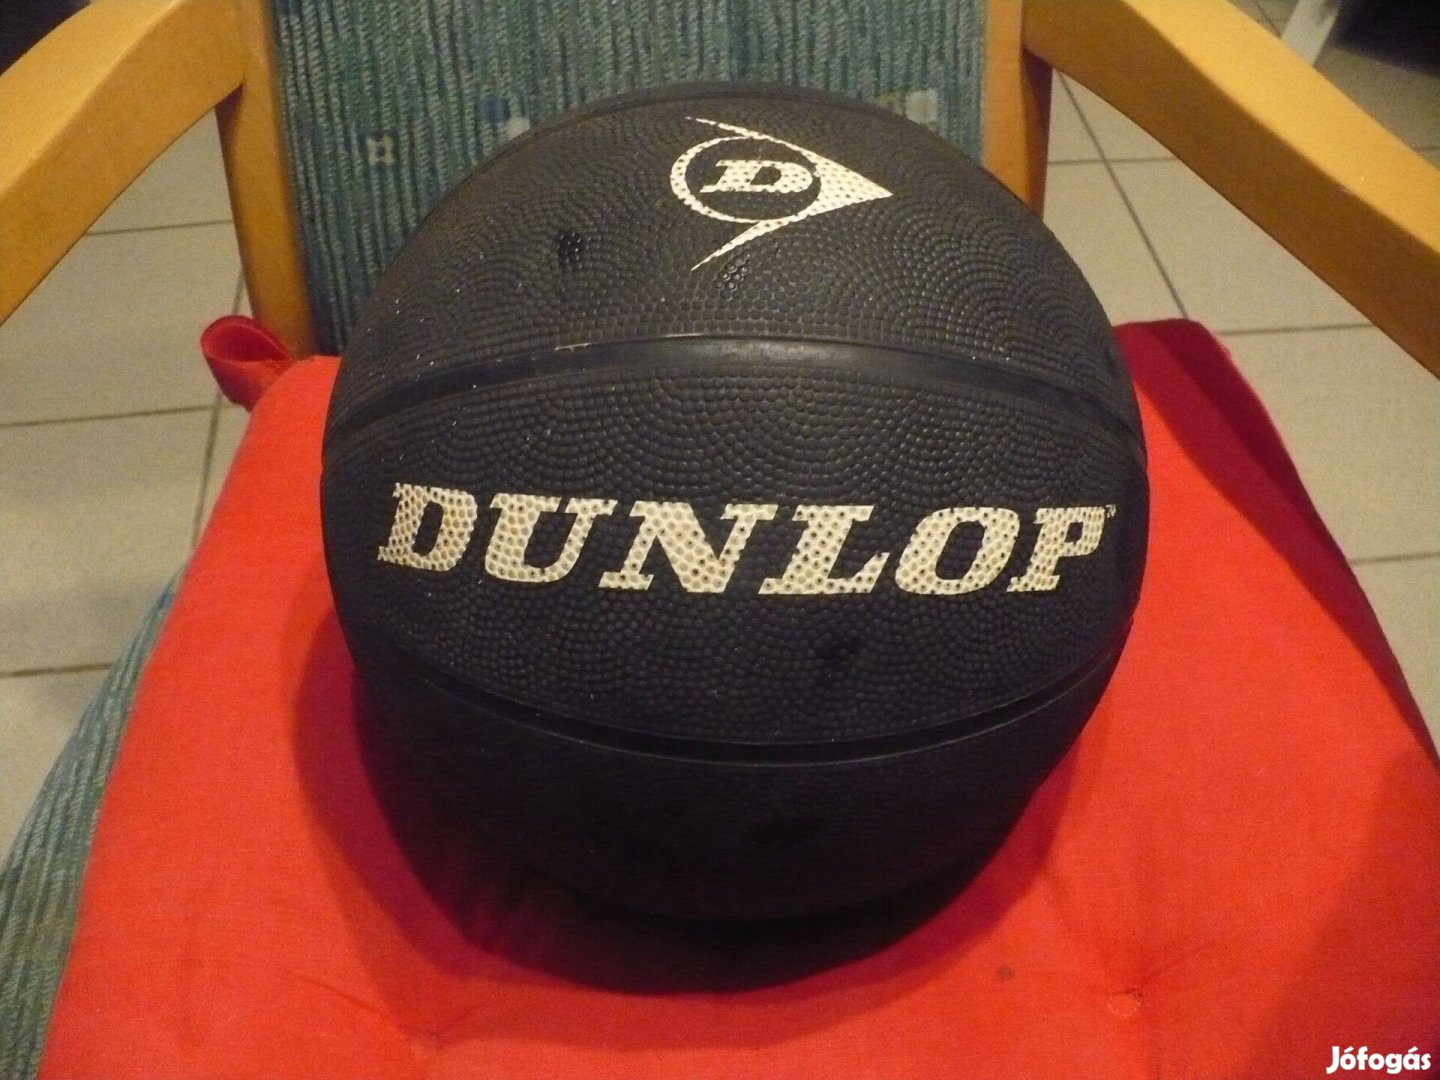 Dunlop labda eladó